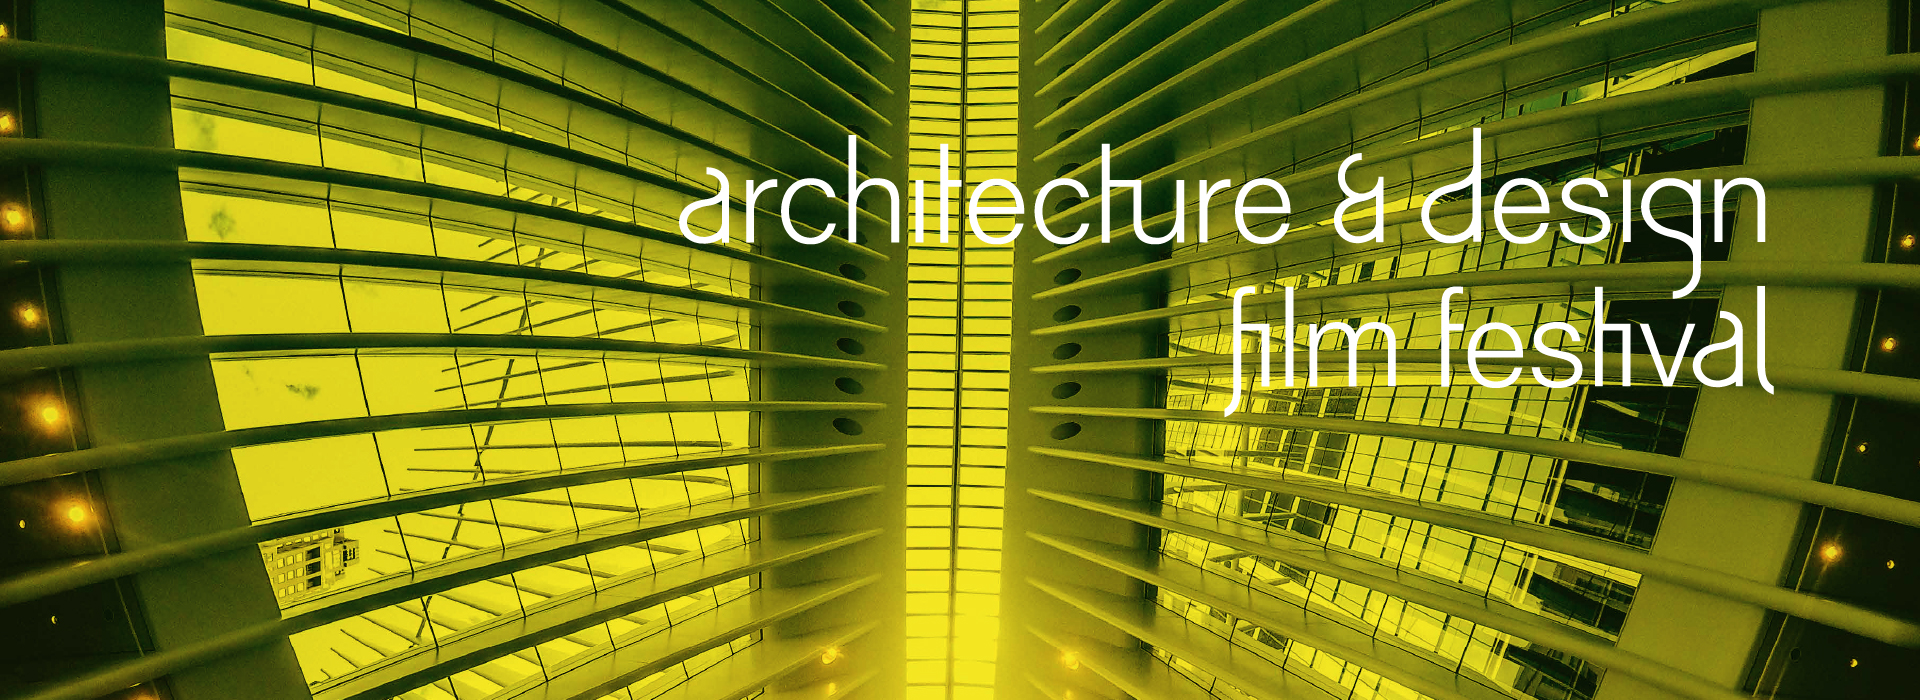 Architecture & Design Film Festival Newsletter